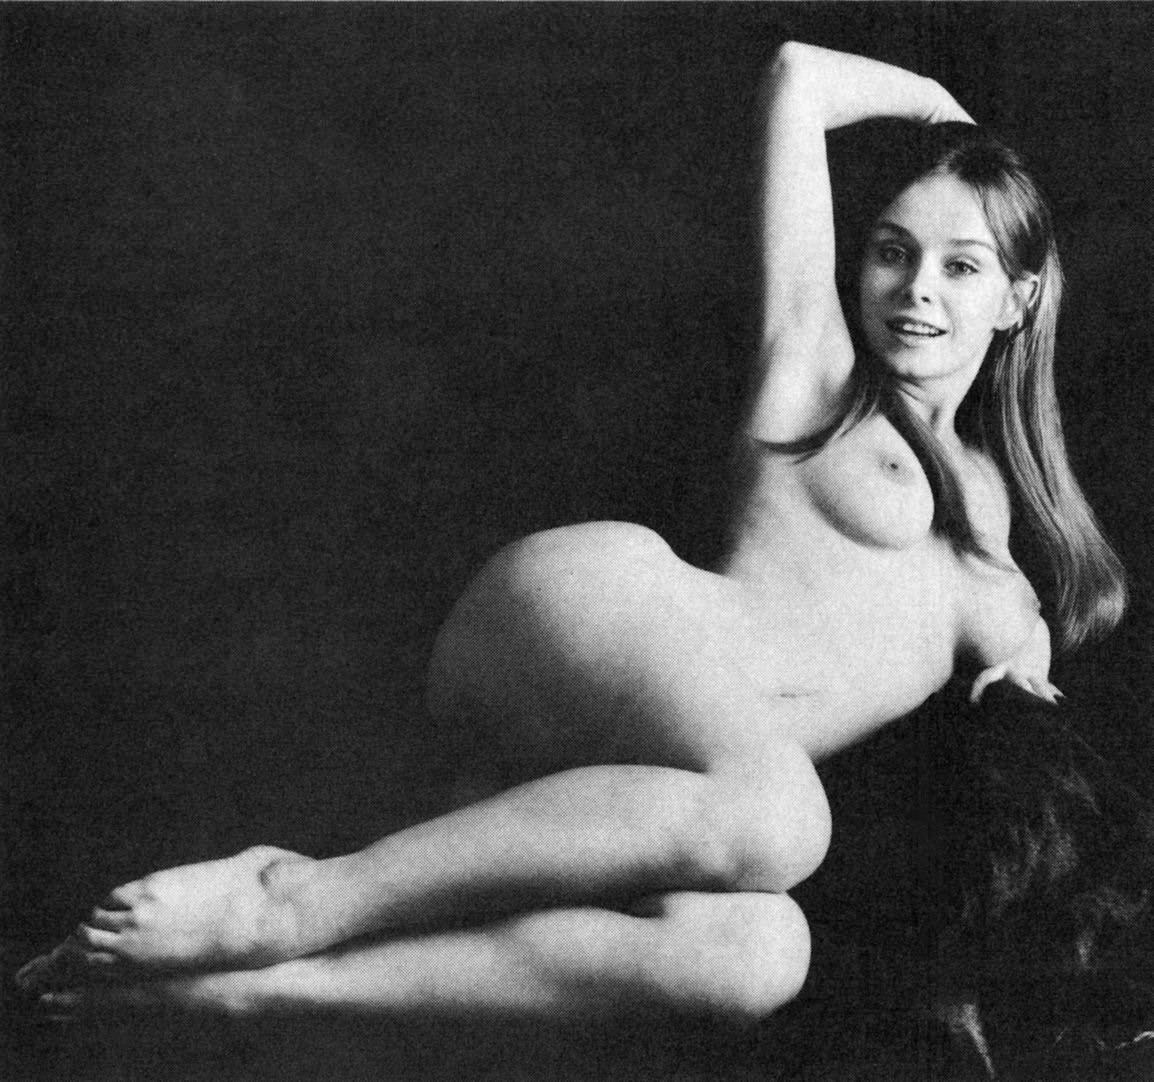 Gayle hunnicutt nude - 🧡 Голая Гейл Ханникатт (Gayle Hunnicutt) фото ...